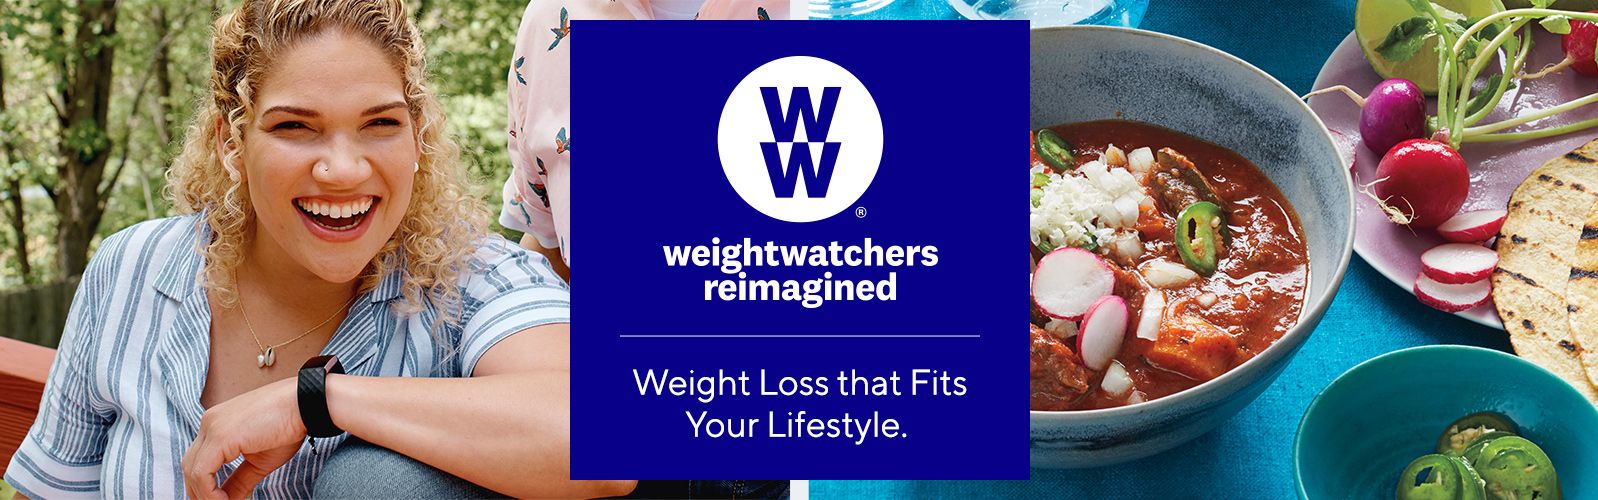 WW Weight Watchers Reimagined—QVC 